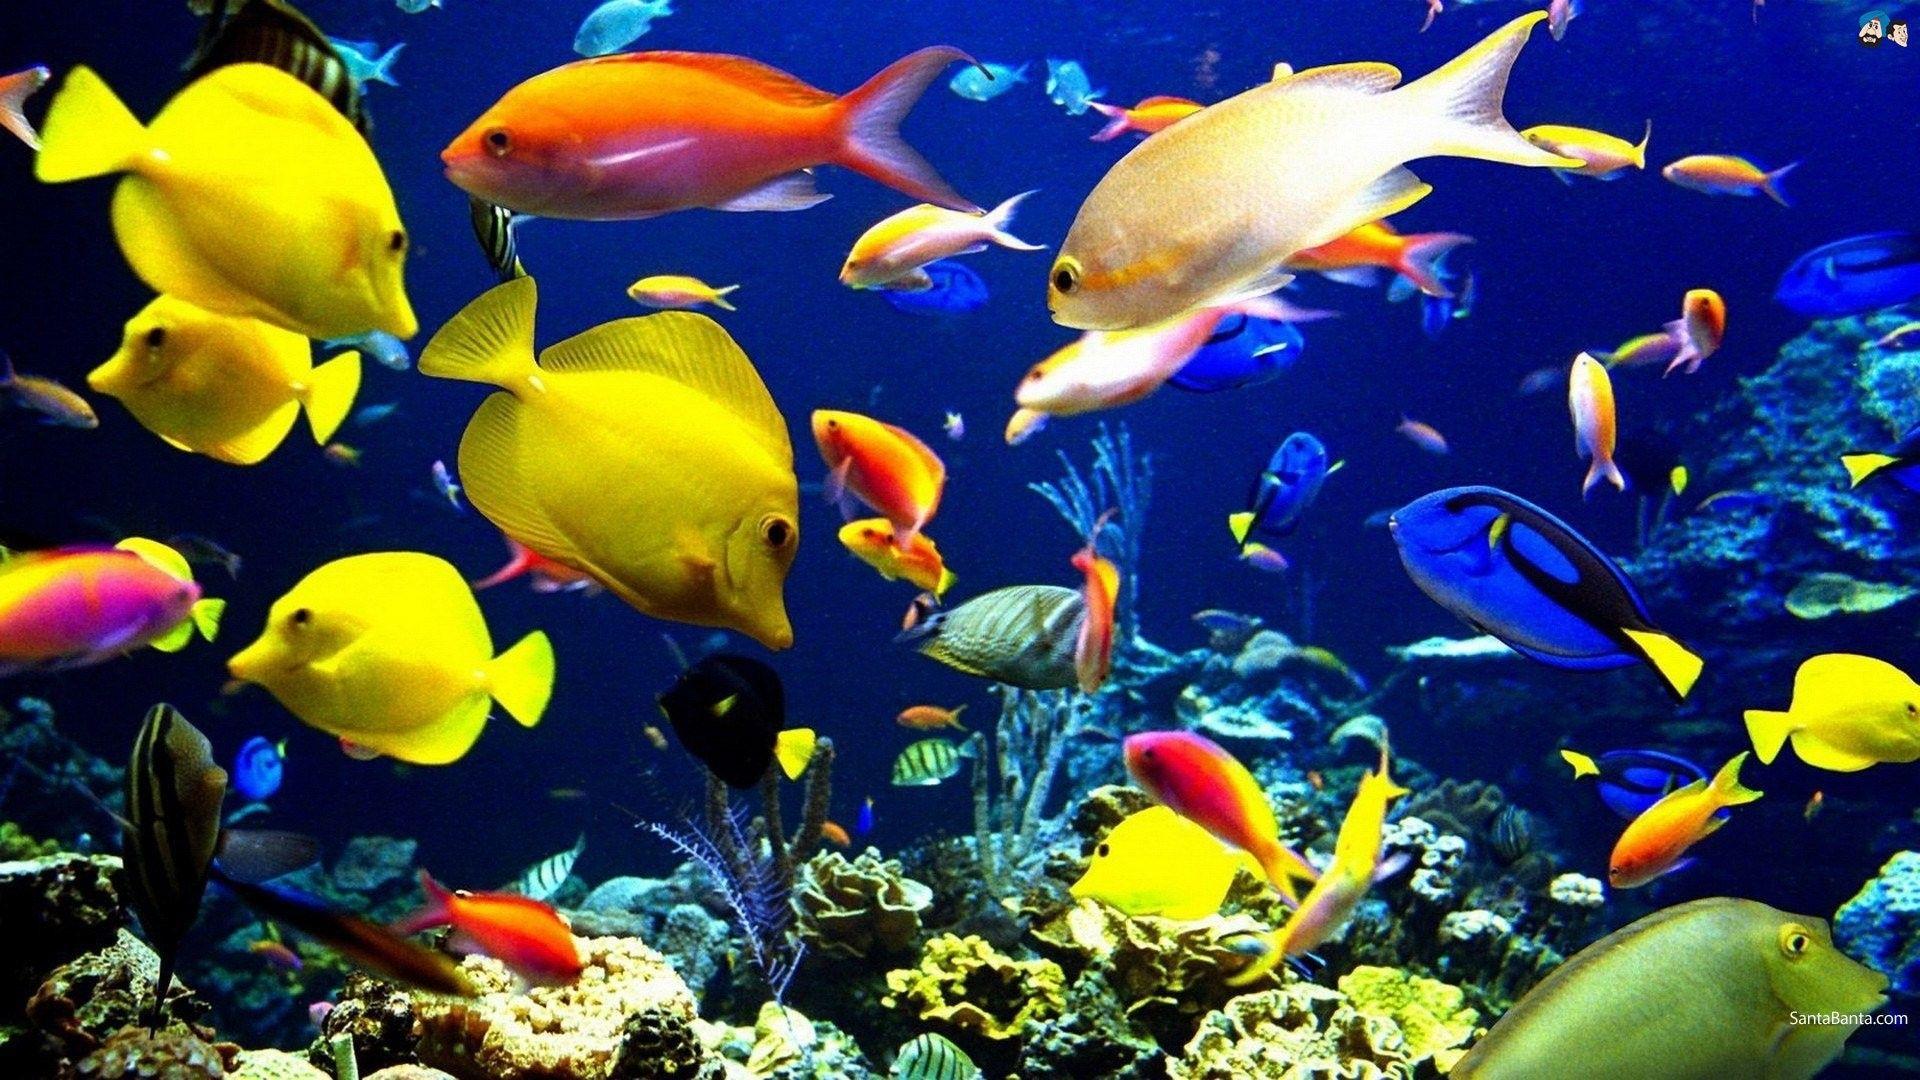 1133CC Color wallpaper: Water Underwater Sealife Fishes Fish Ocean